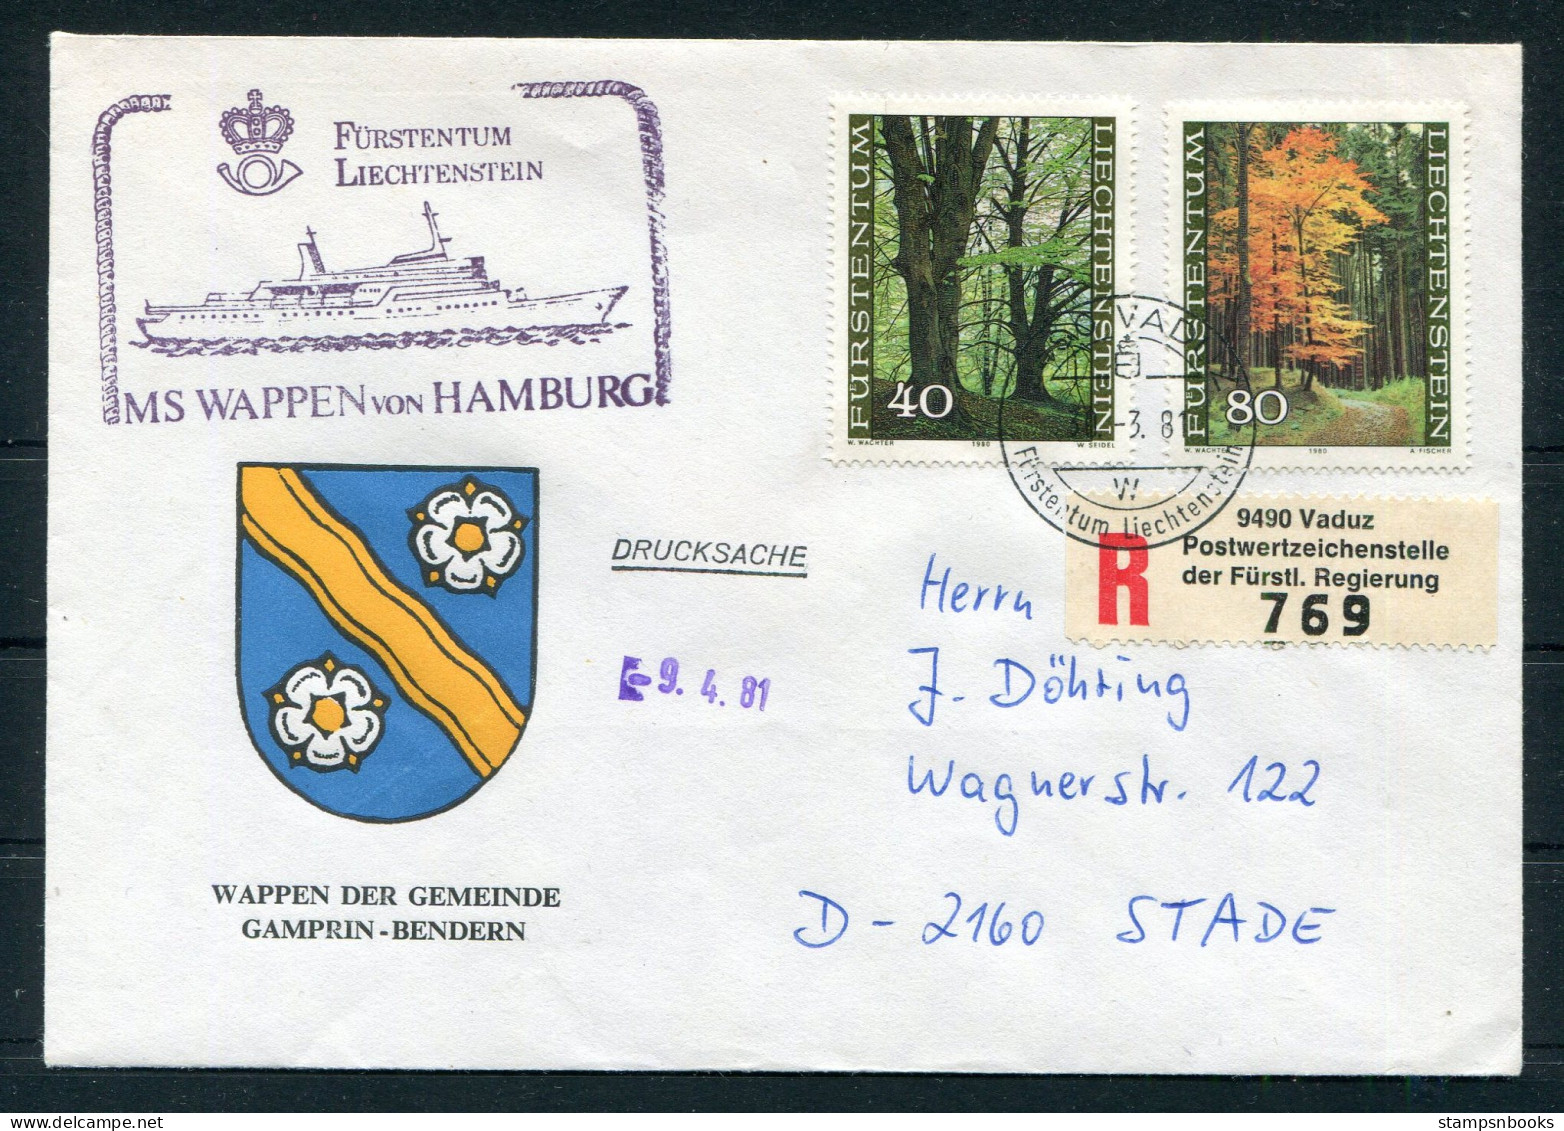 1981 Liechtenstein Registered Vaduz Trees MS WAPPEN VON HAMBURG Ship Cover. Bendern Gamprin Coat-of-Arms - Covers & Documents